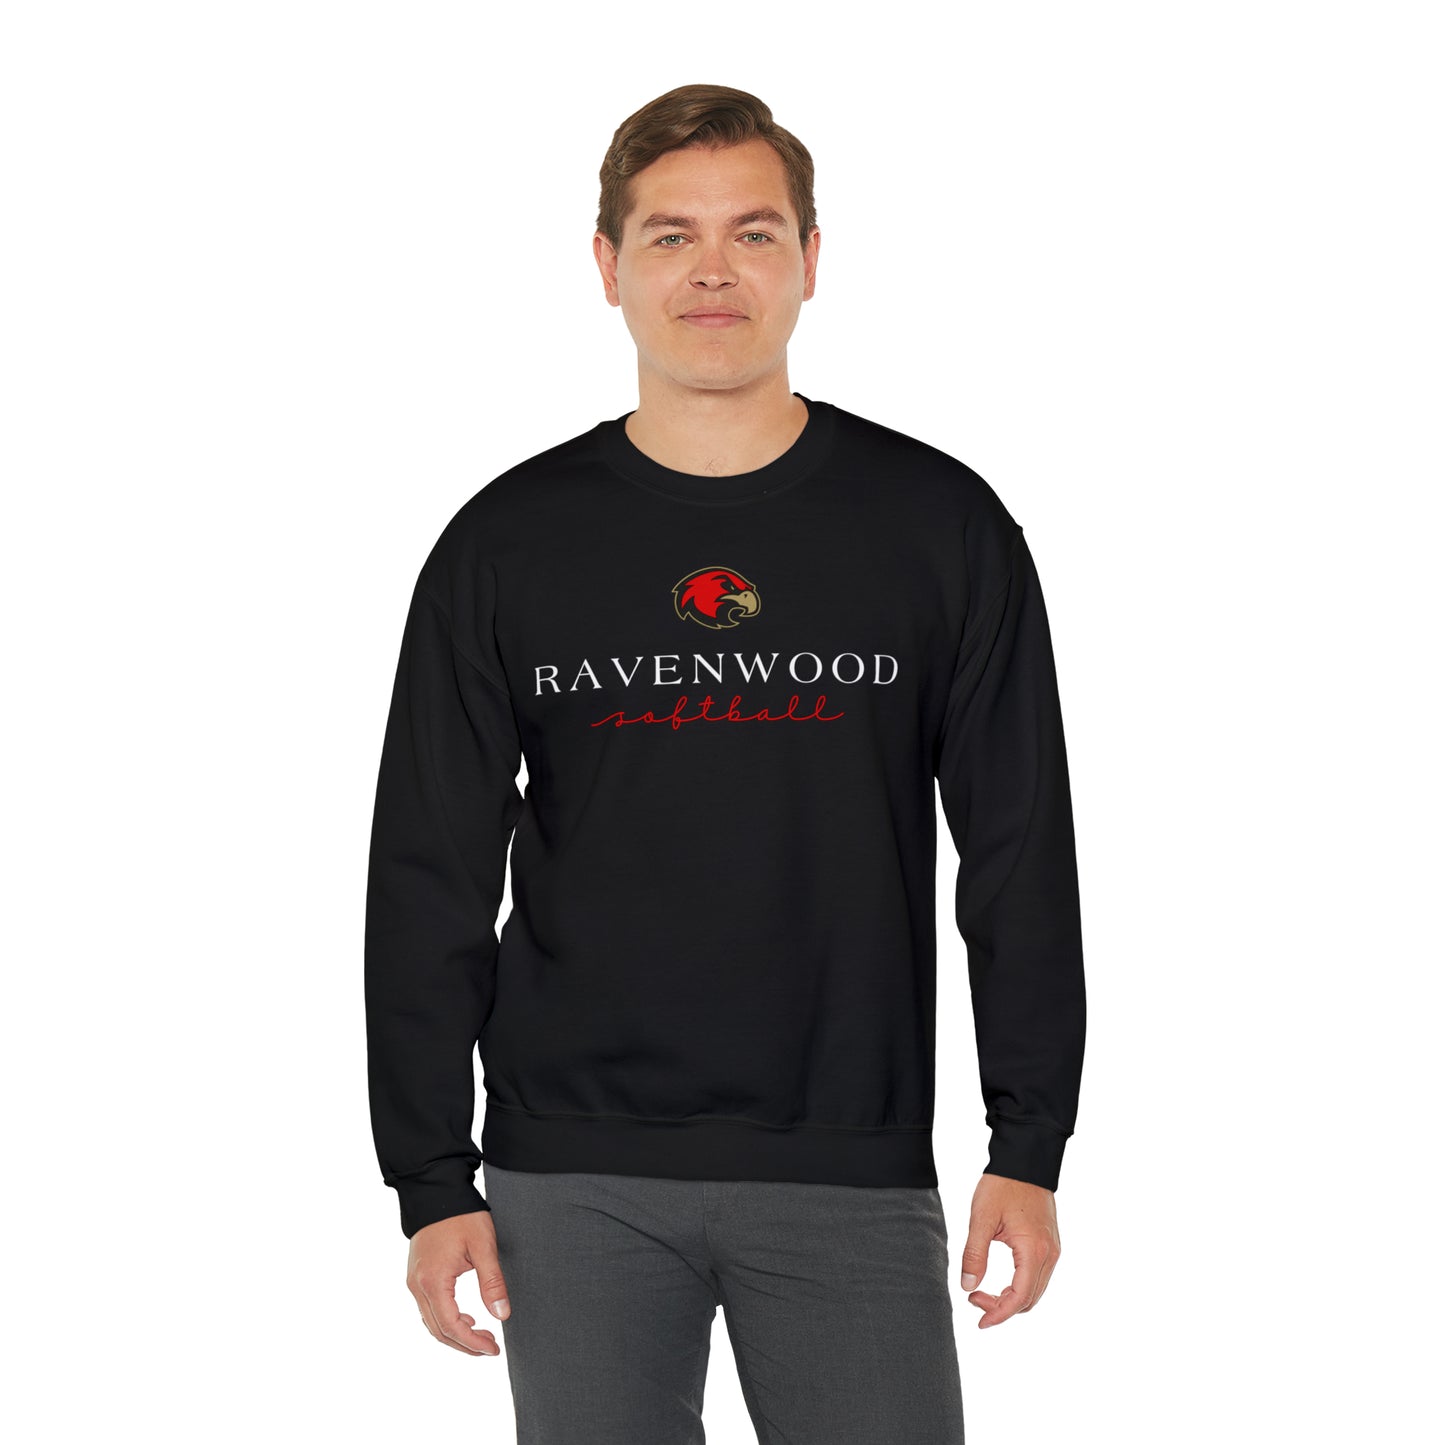 Ravenwood Softball Cursive Crewneck Sweatshirt